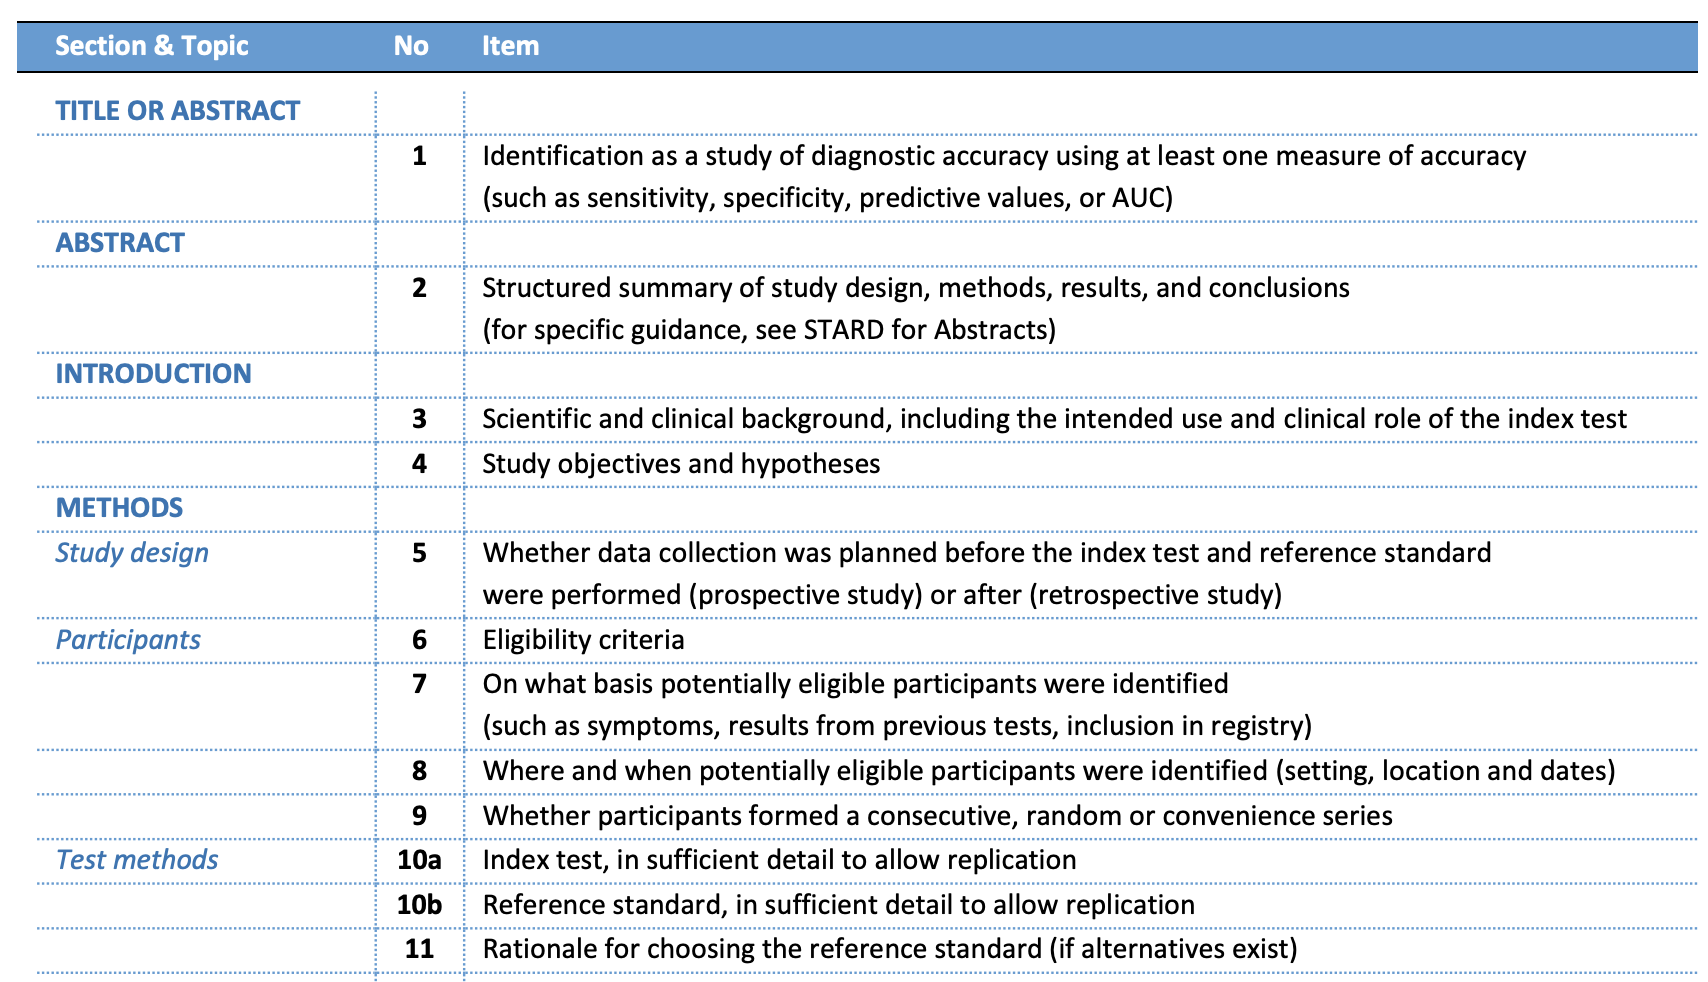 STARD guidelines for diagnostic studies, [www.equator-network.org](http://www.equator-network.org/wp-content/uploads/2015/03/STARD-2015-checklist.pdf)